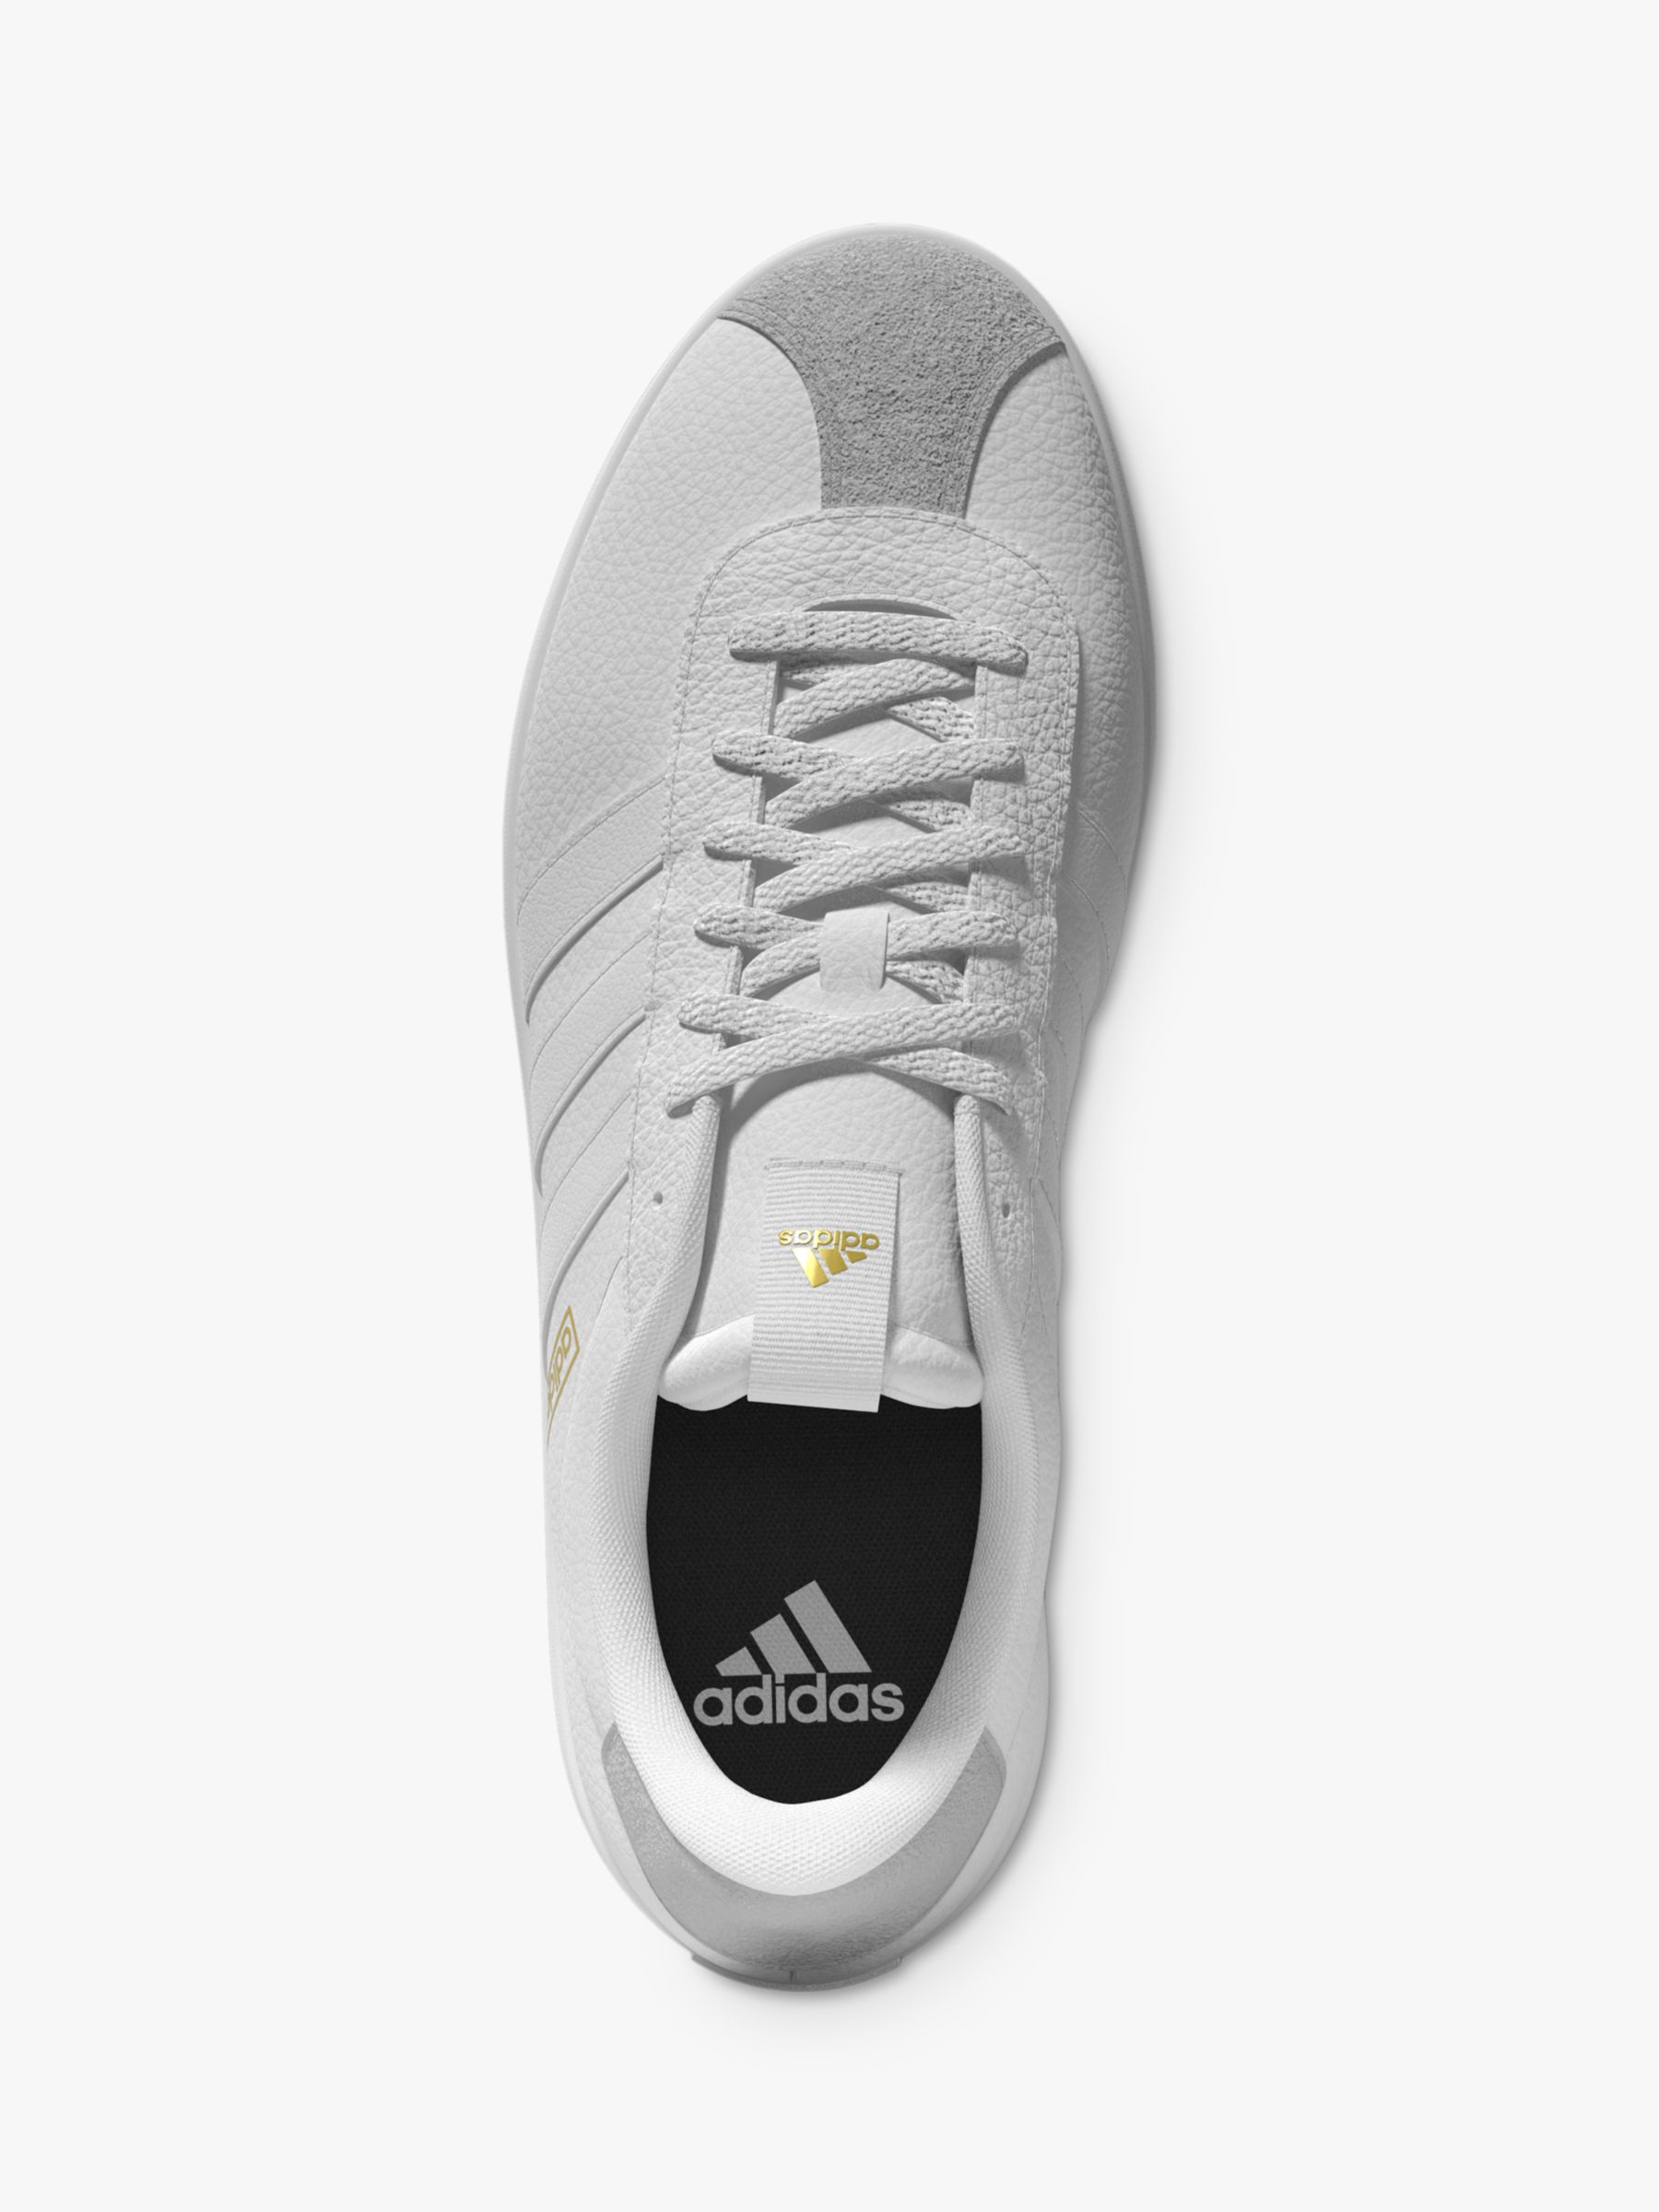 adidas VL Court Trainers, White/White/Grey One, 4